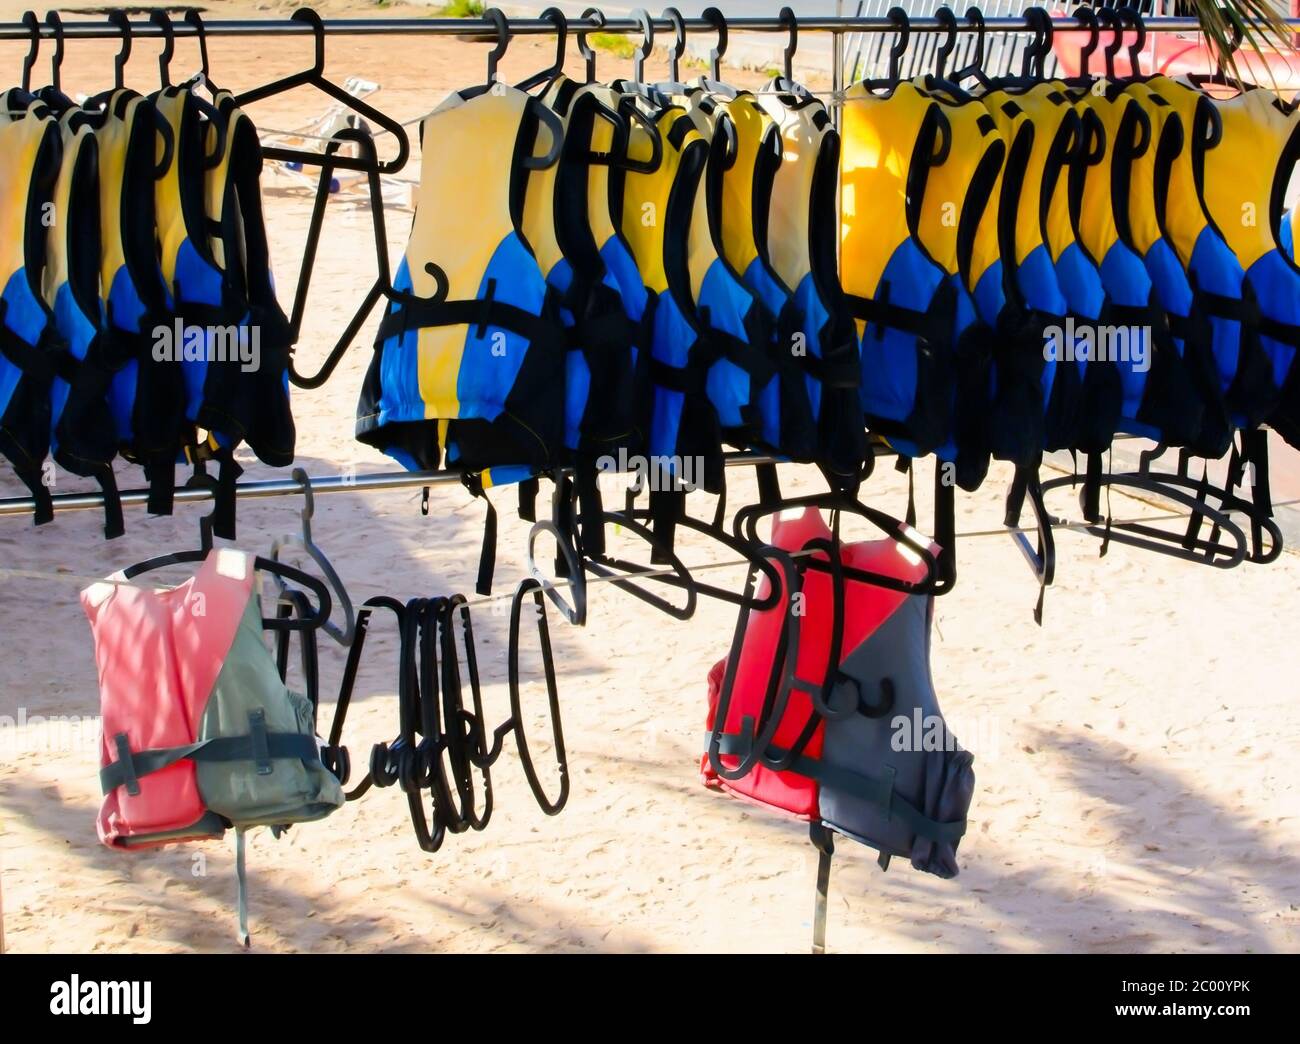 Life jackets on a rack Stock Photo